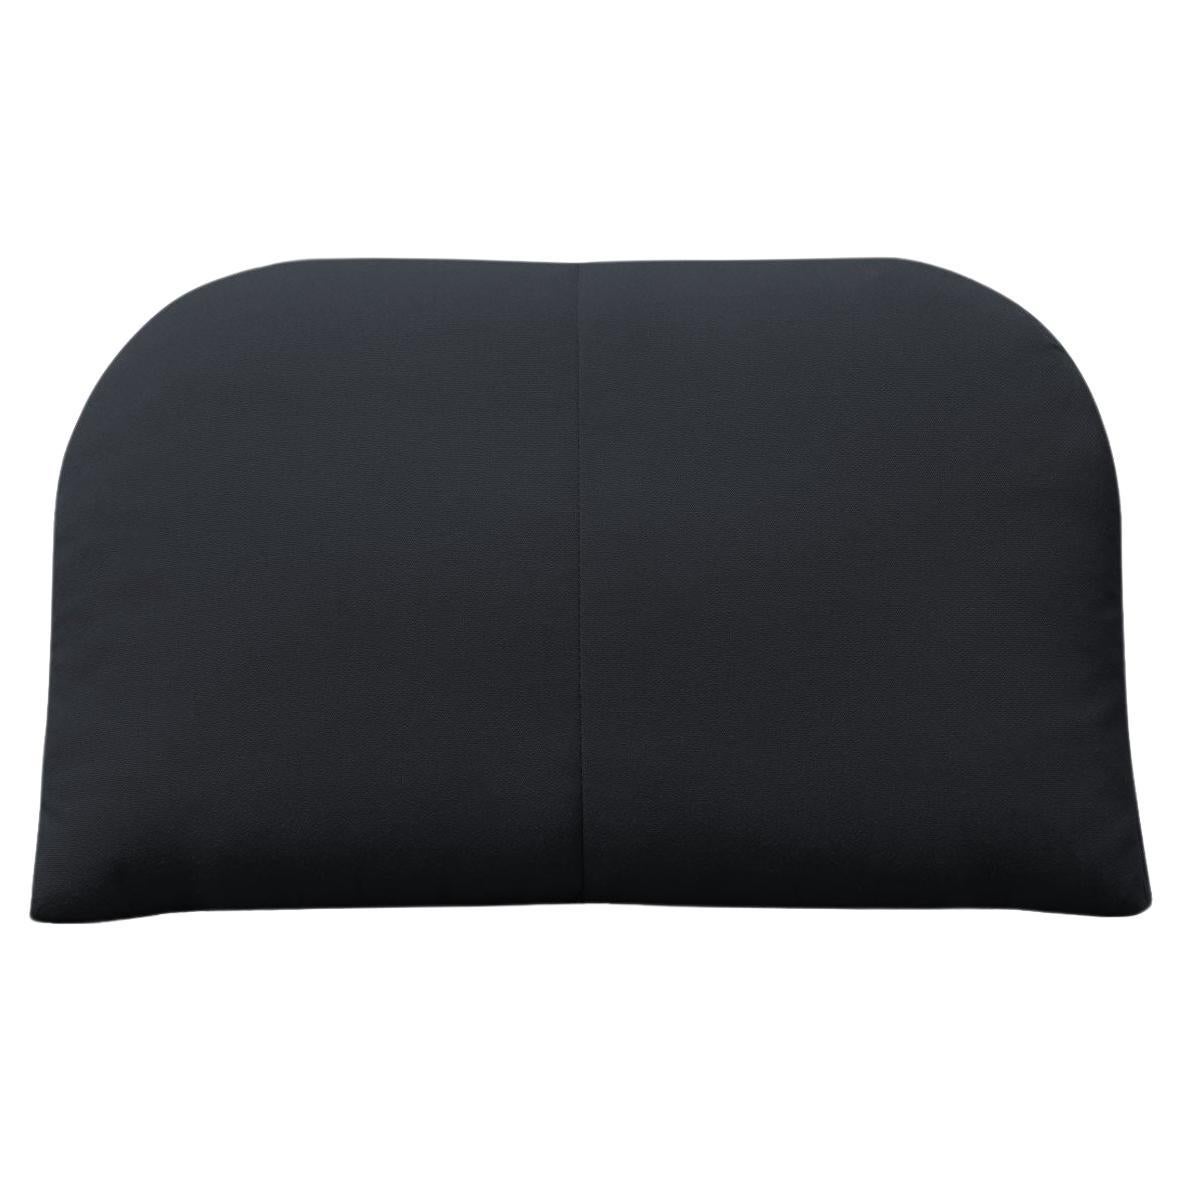 Bend Goods - Arc Throw Pillow in Black Sunbrella For Sale